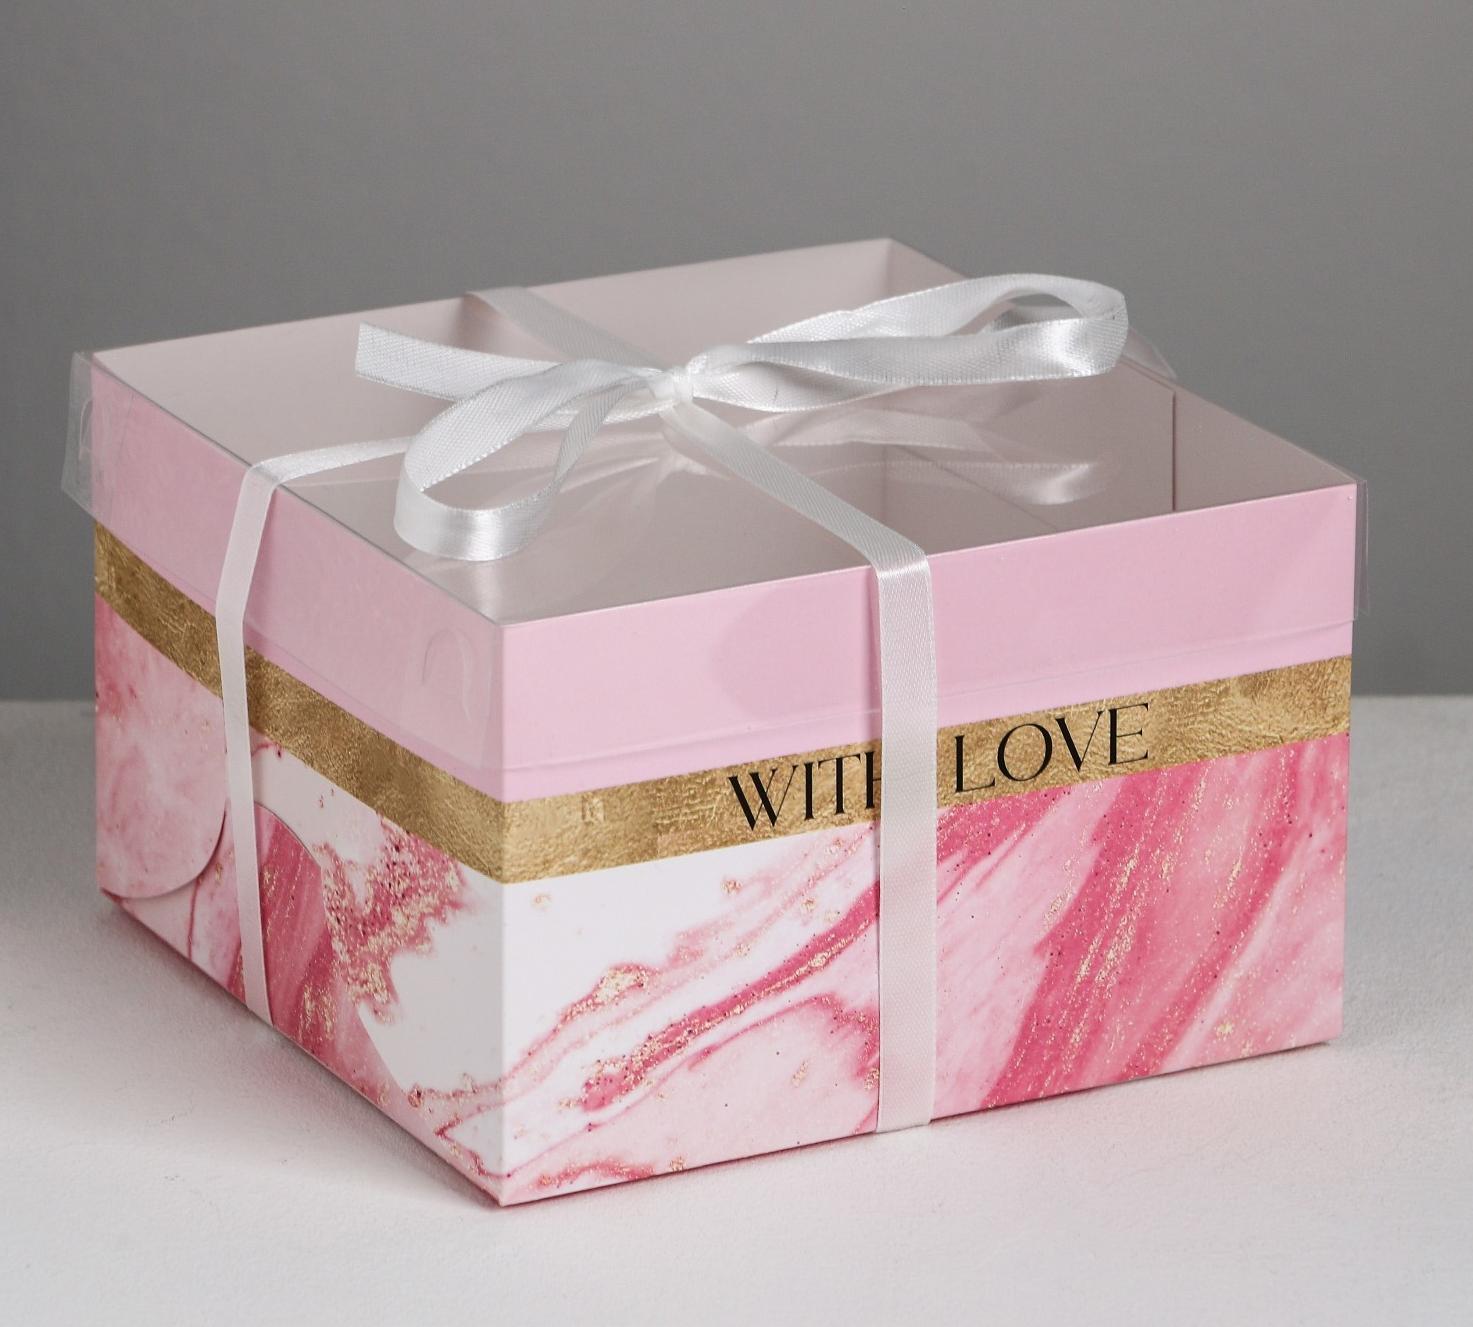 Коробка для капкейков "With love", 16×16×10 см